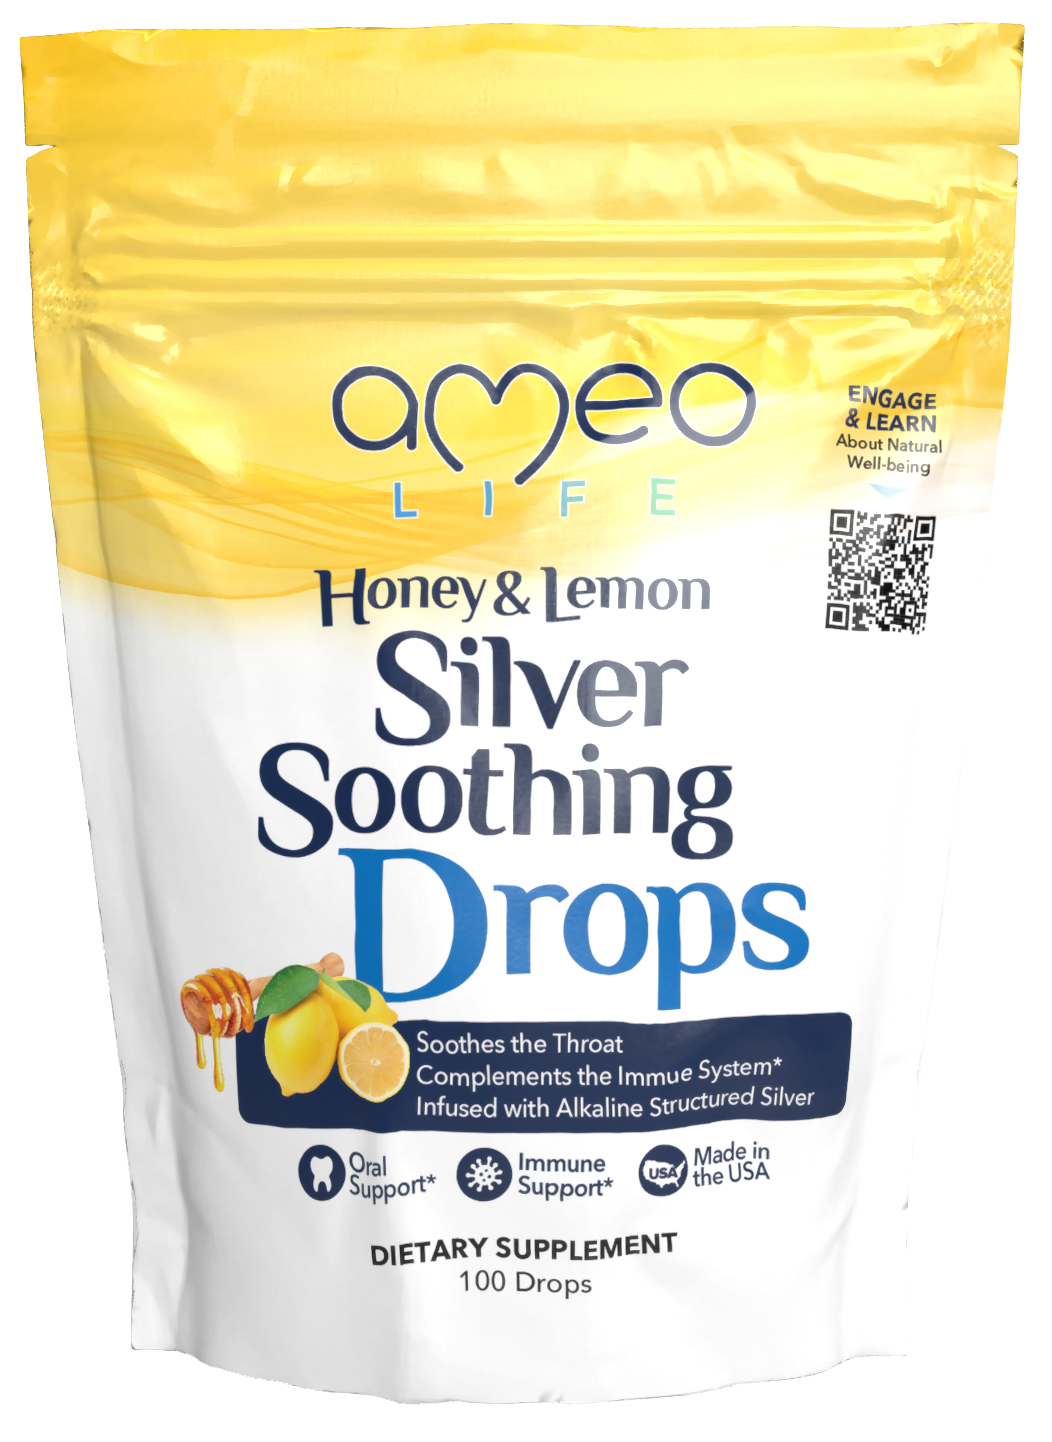 Honey & Lemon Silver Soothing Drops